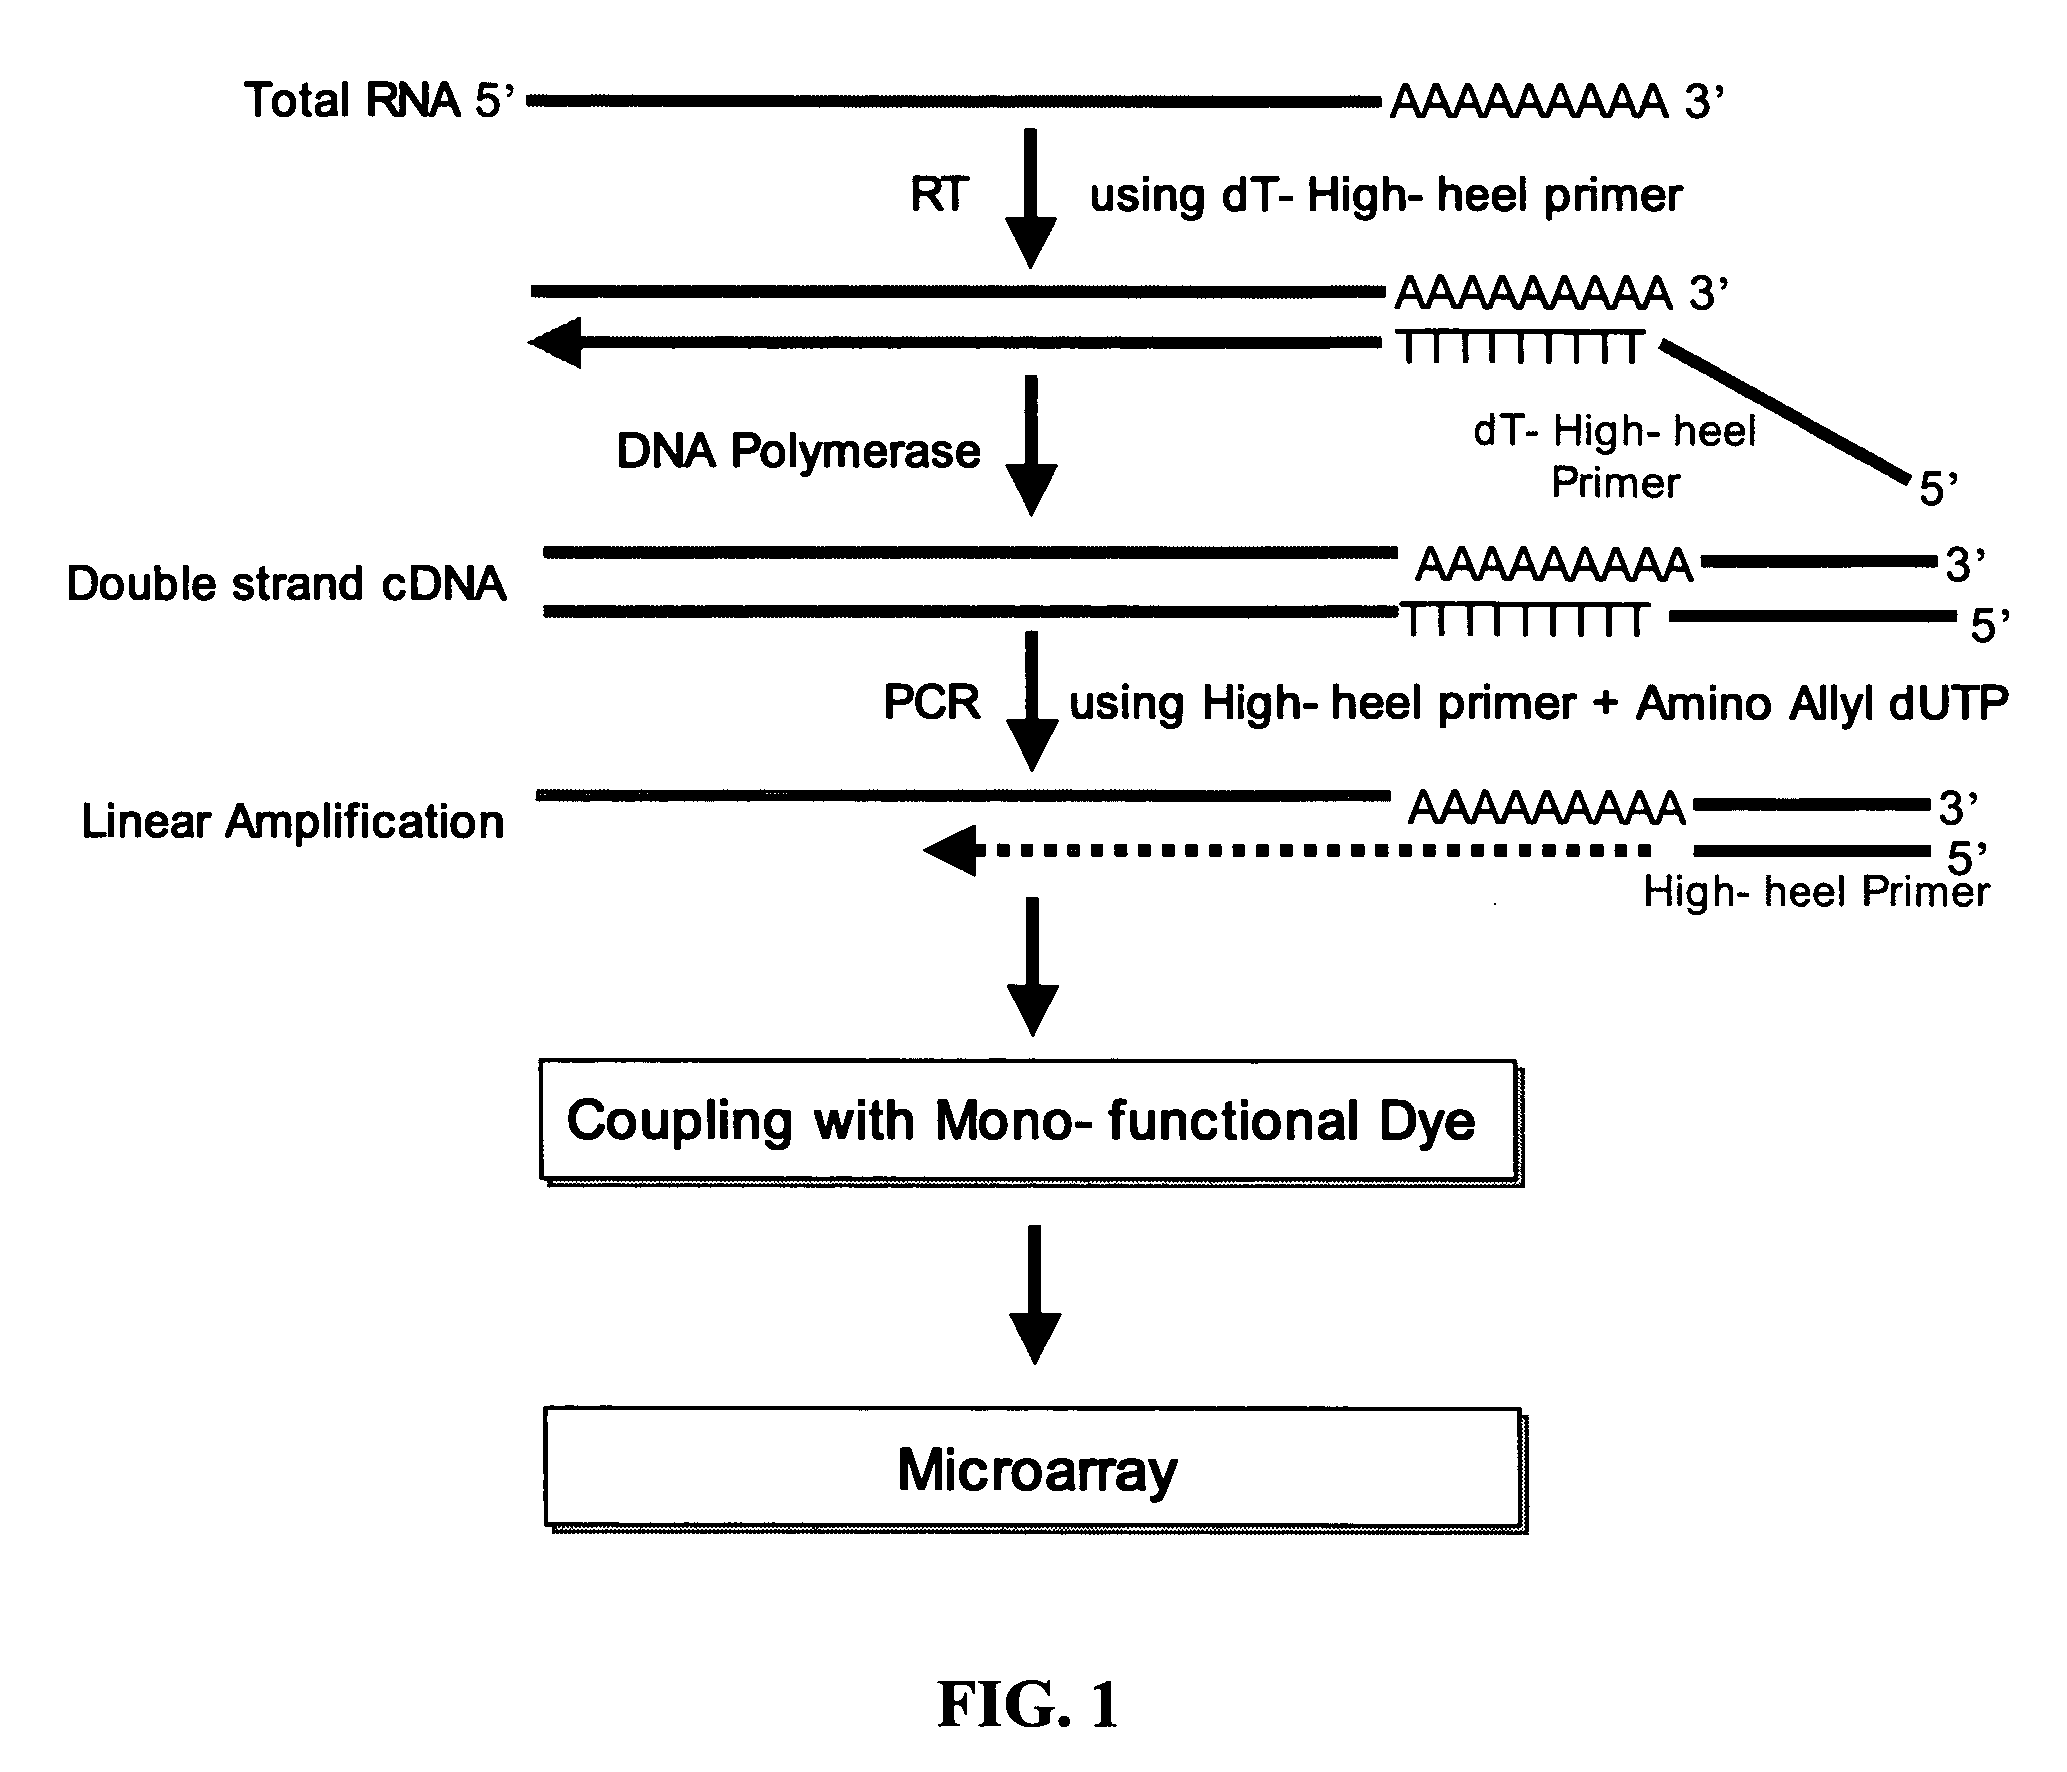 Method for linear amplification of RNA using high-heel primer